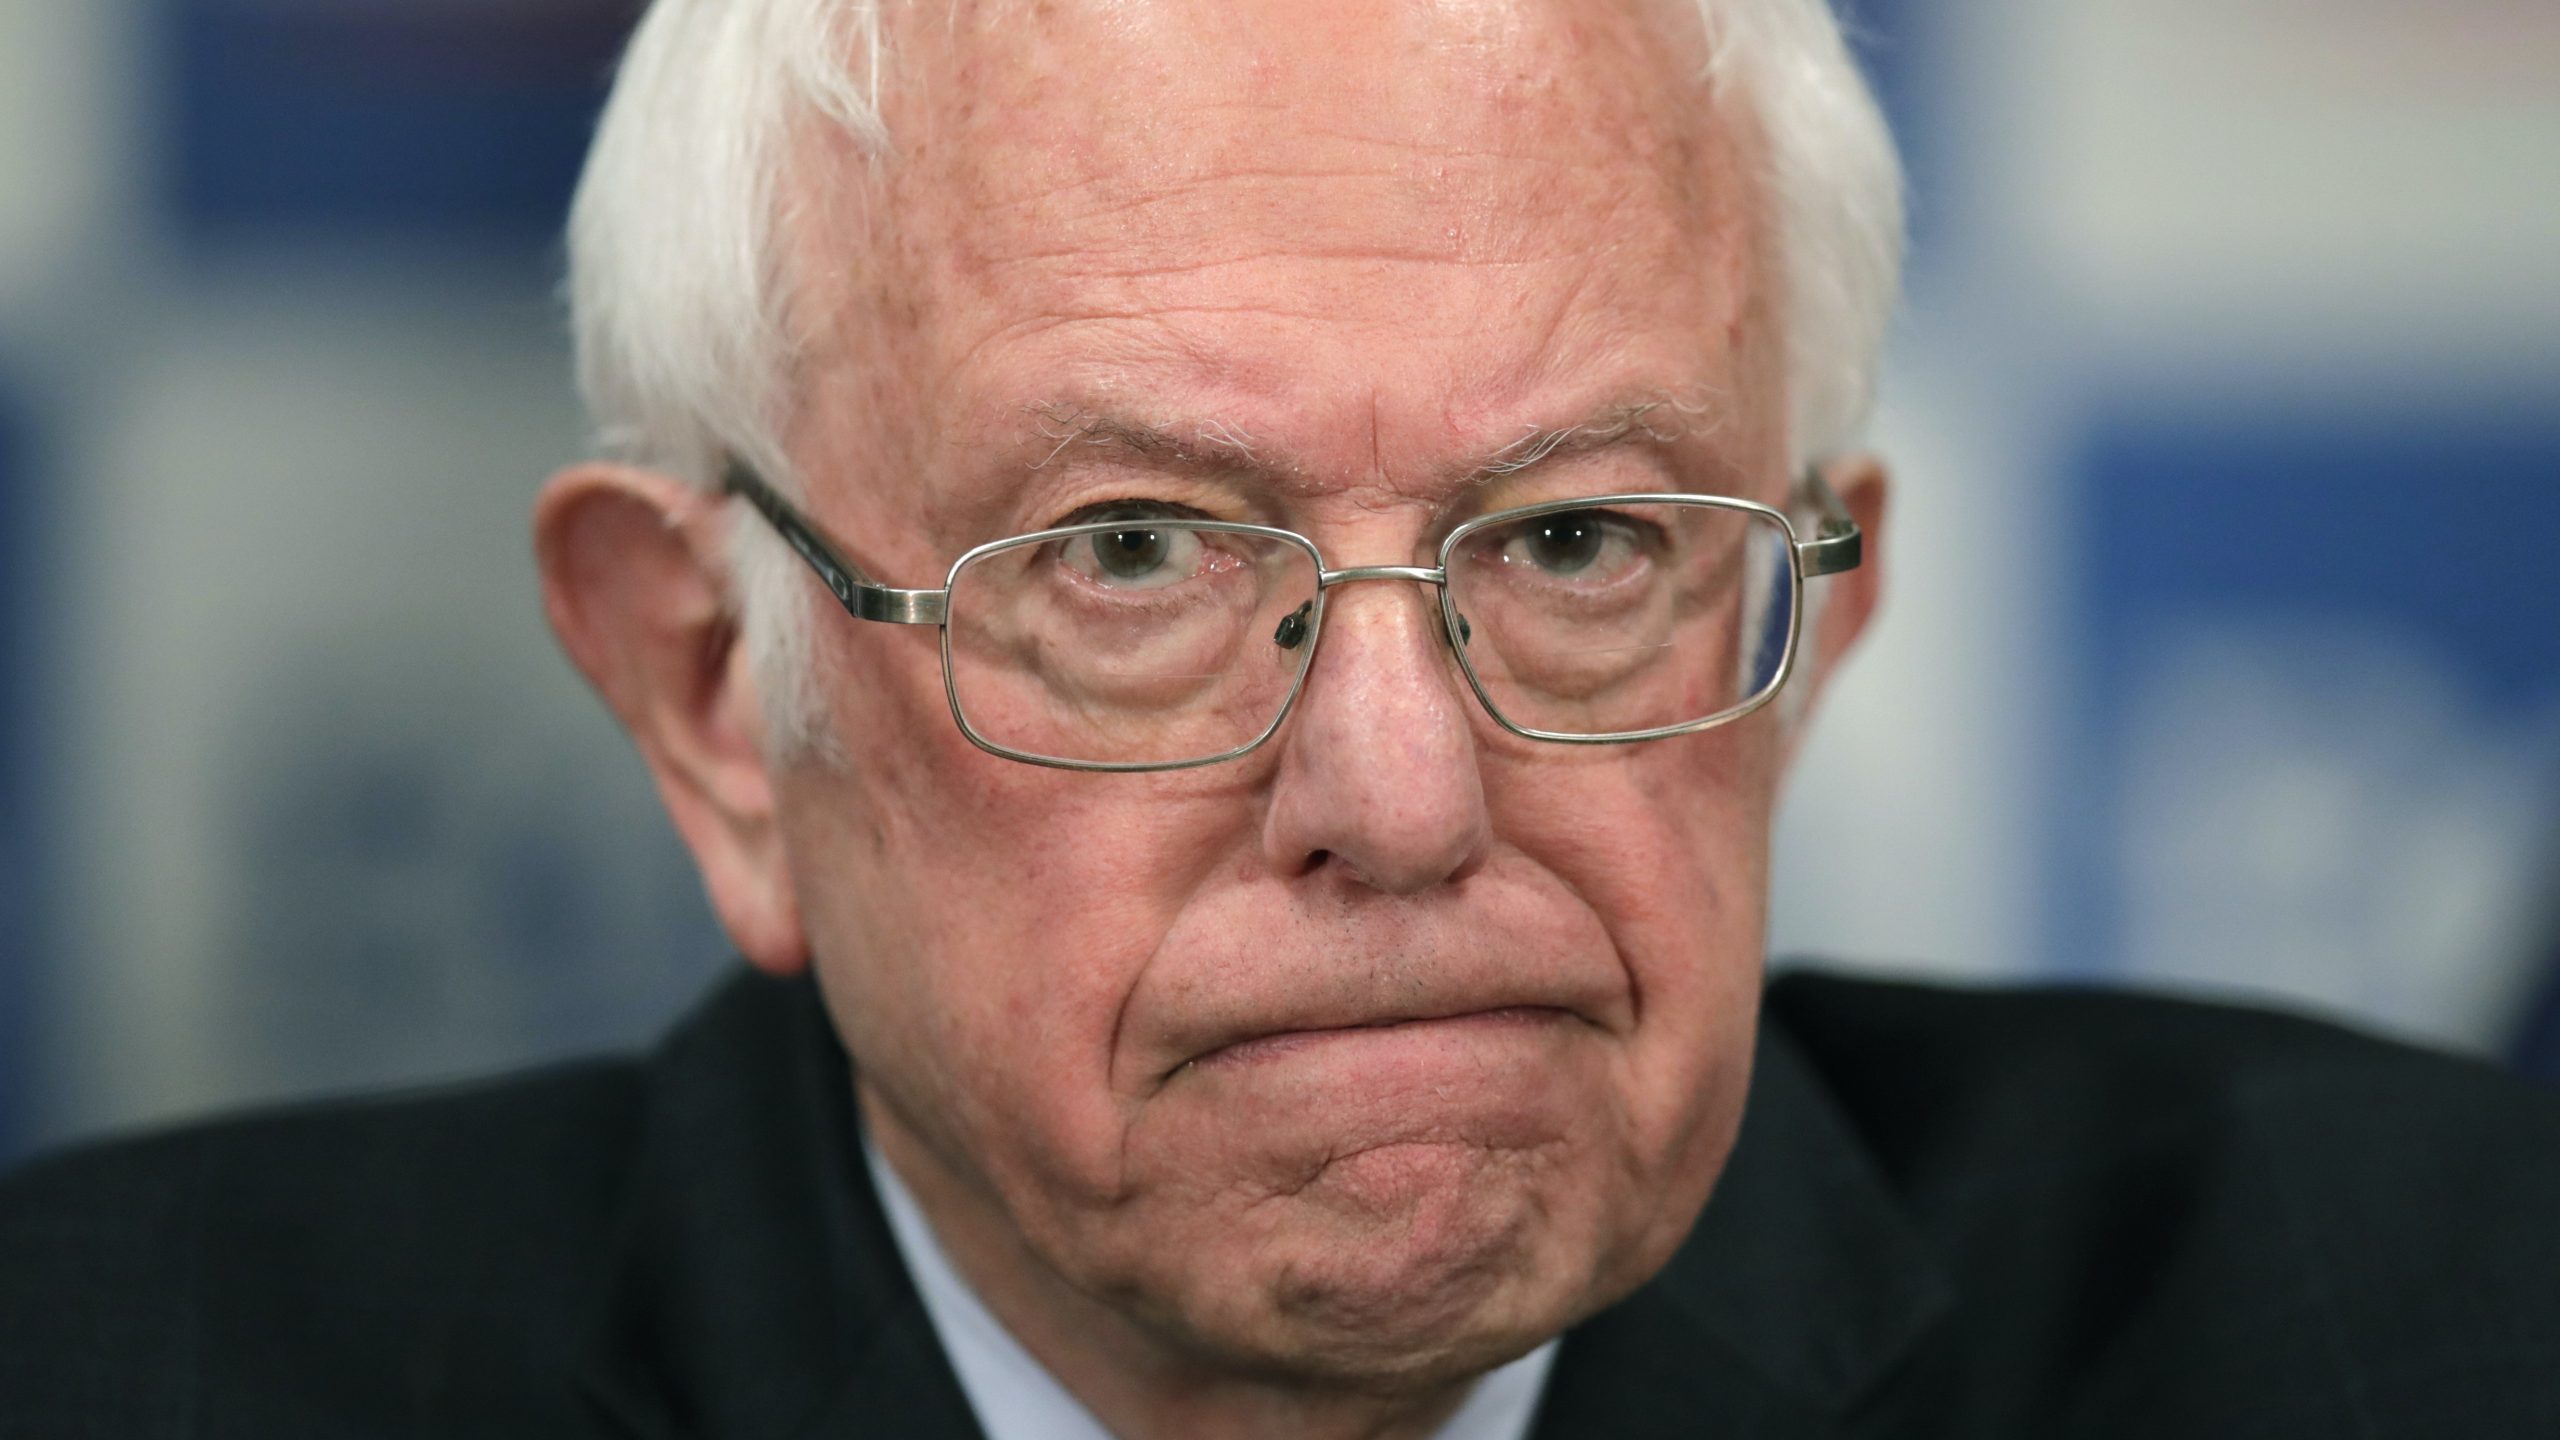 Tributes pour in for Bernie Sanders as he ends US presidential bid